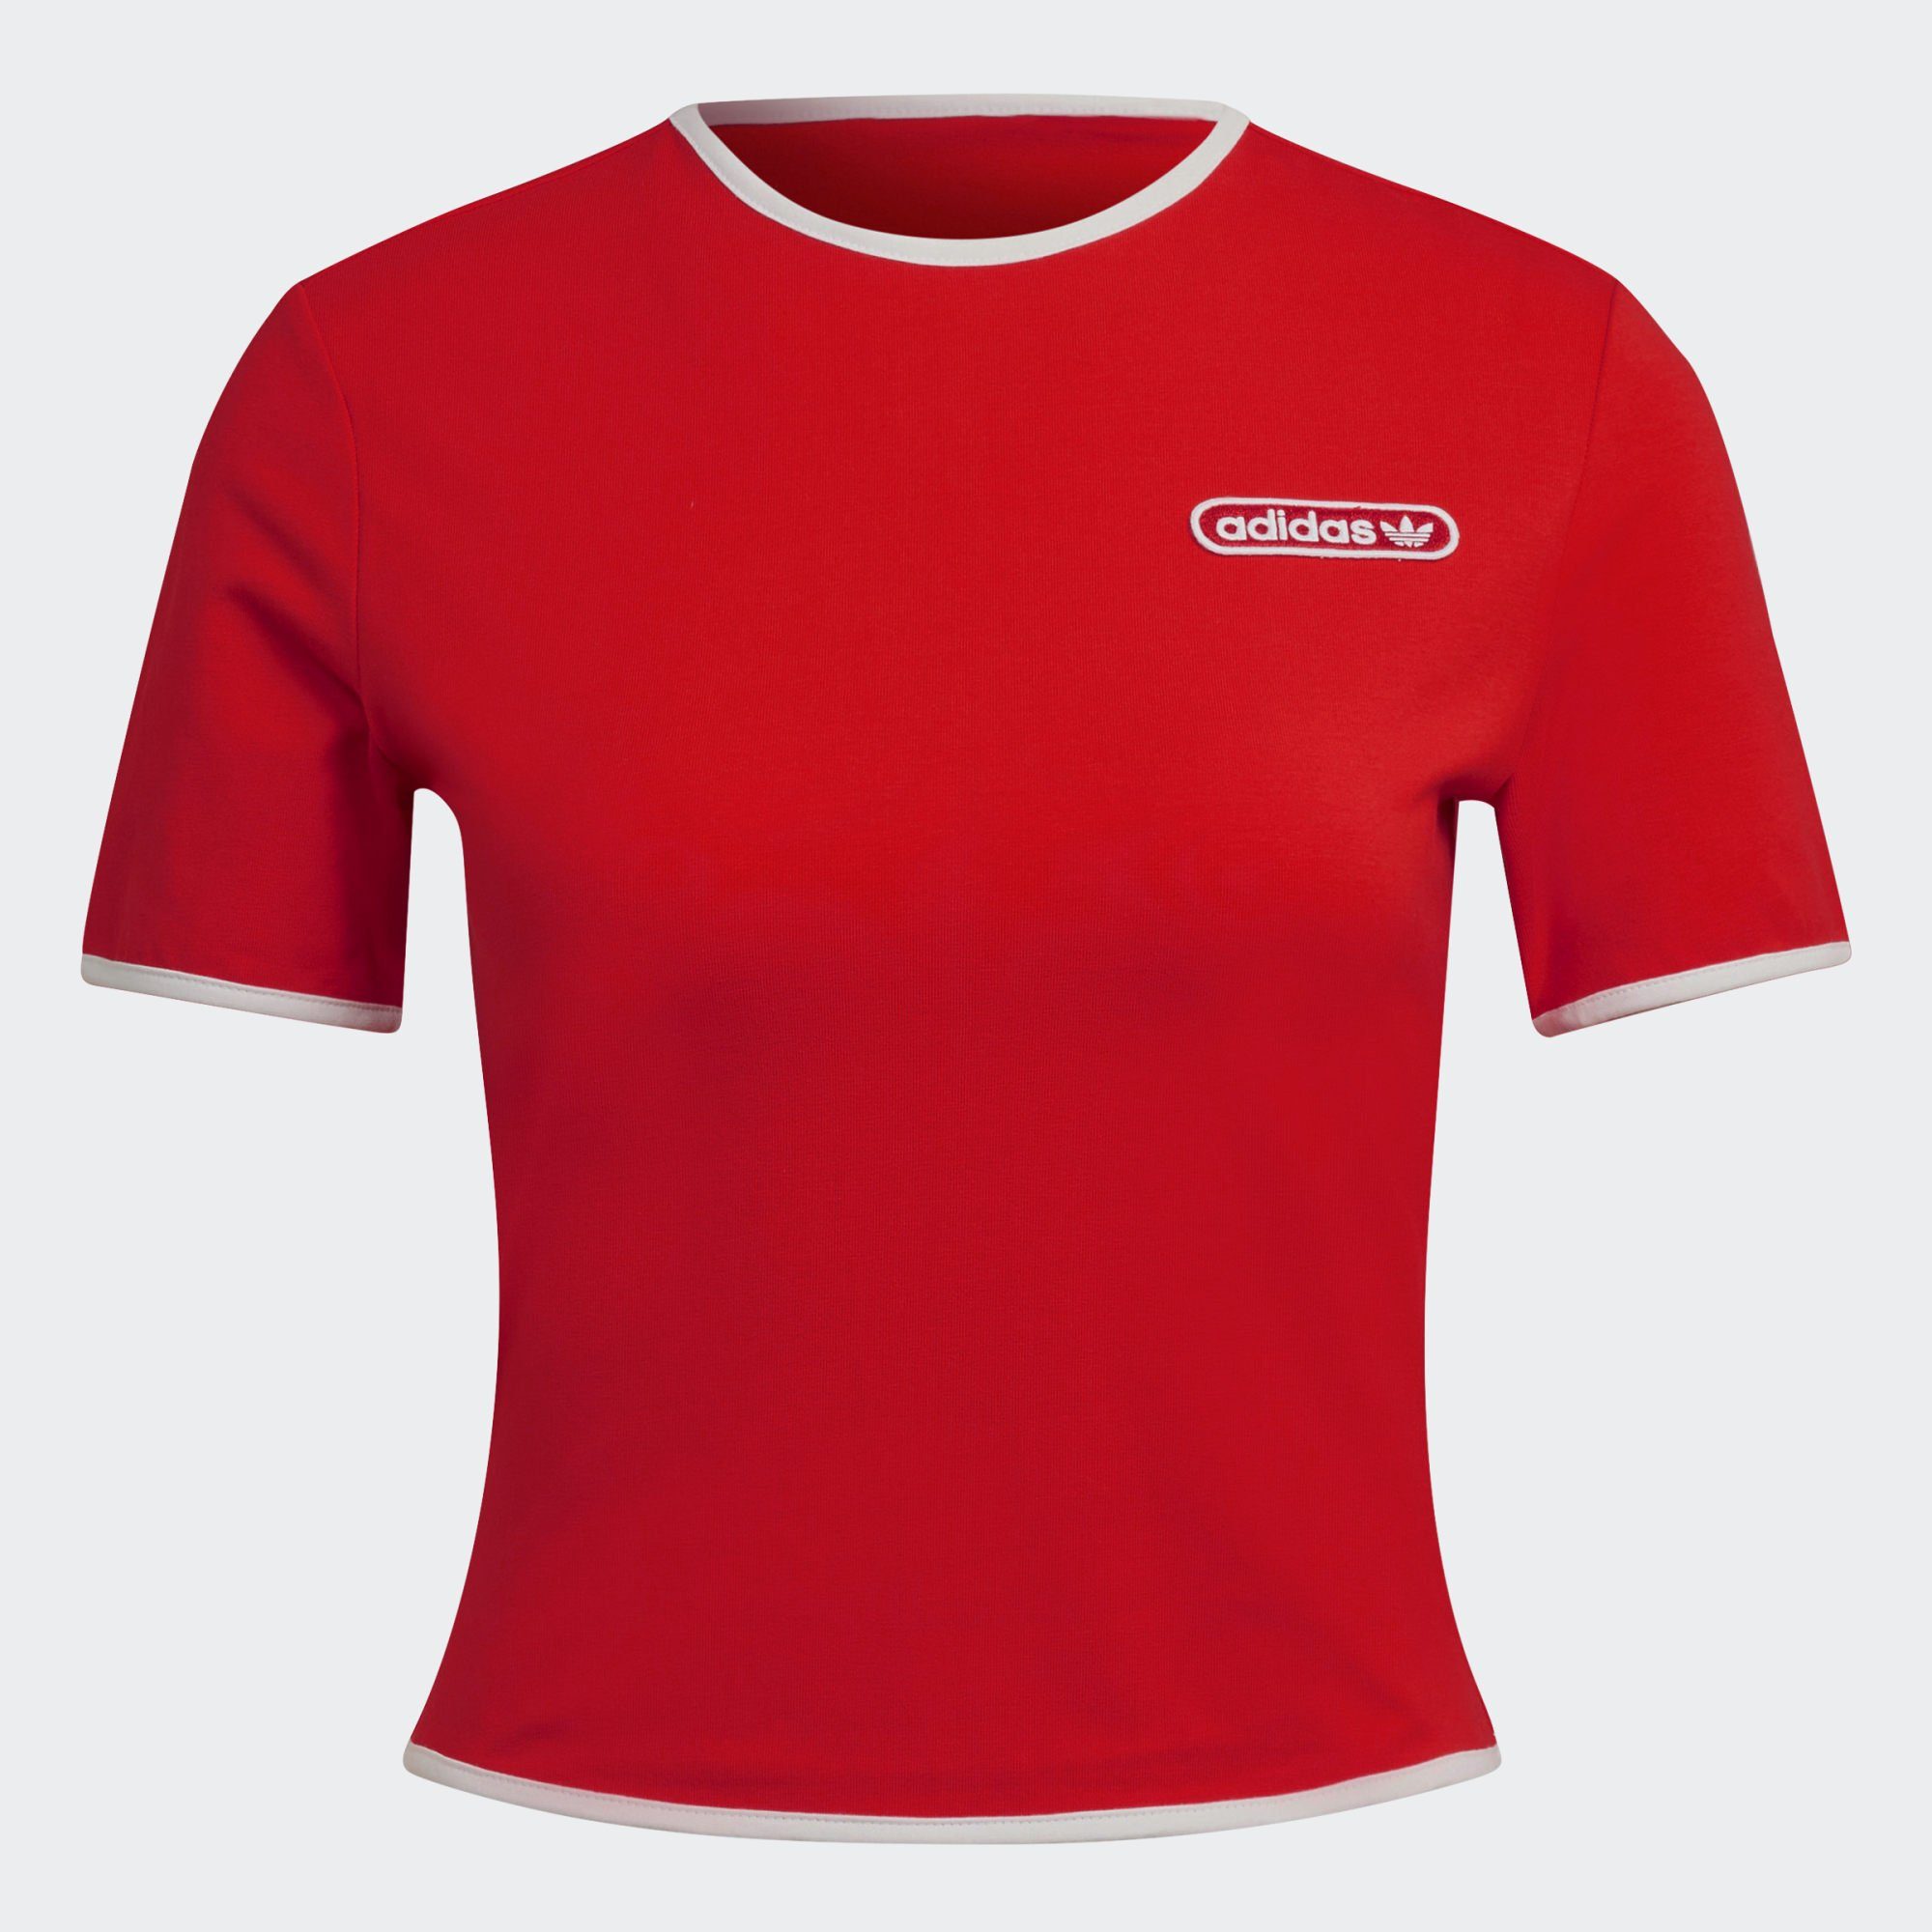 BINDING T-Shirt Originals adidas DETAILS CROP Red T-SHIRT Vivid